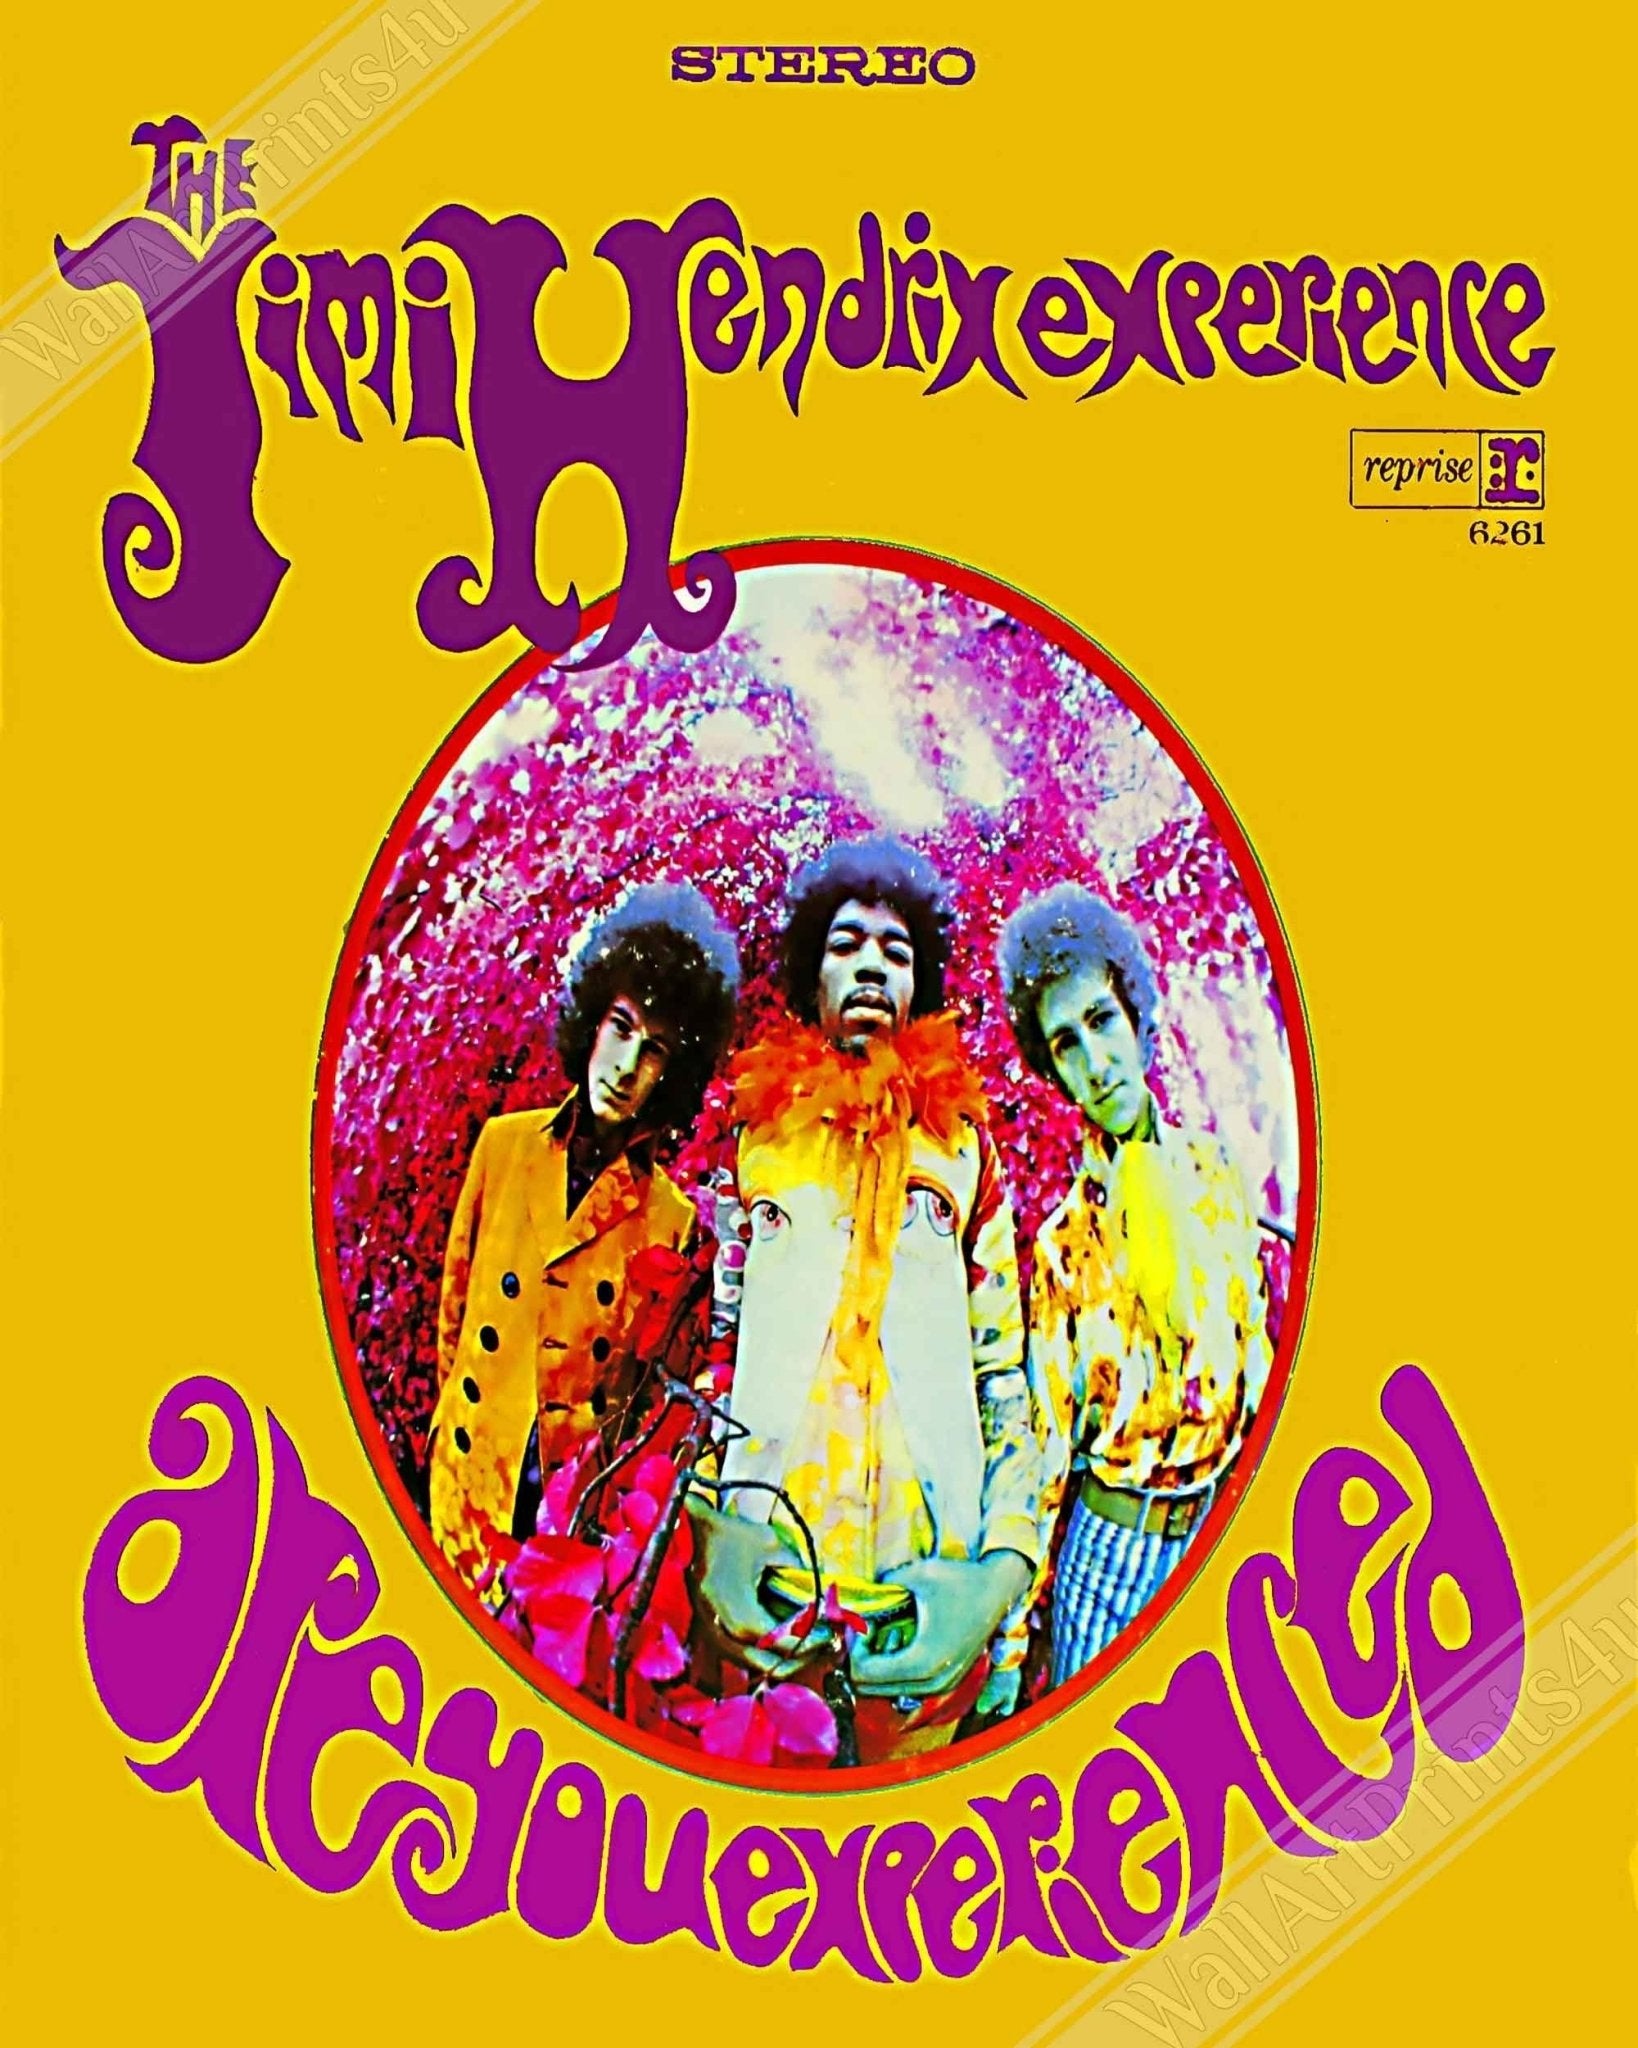 Jimi Hendrix Framed, Jimi Hendrix Experience Album Cover - Jimi Hendrix Framed Print - Psychedelic Rock UK, EU USA Domestic Shipping - WallArtPrints4U